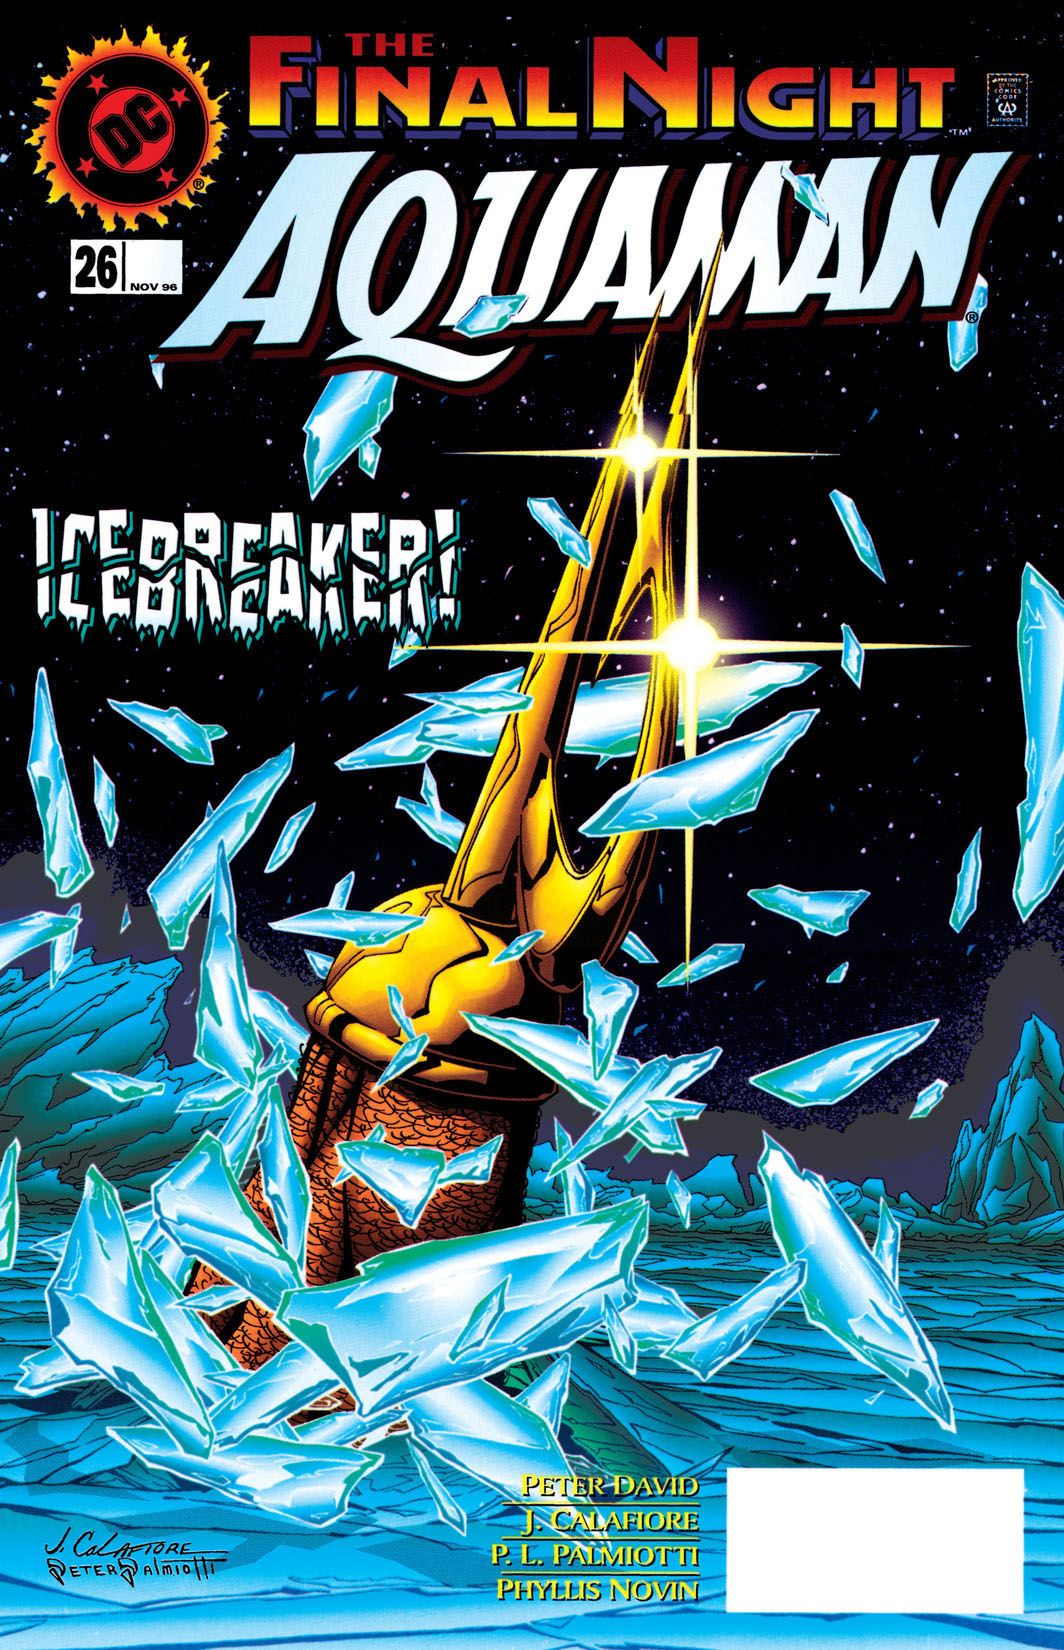 Aquaman (1994-) #26 preview images